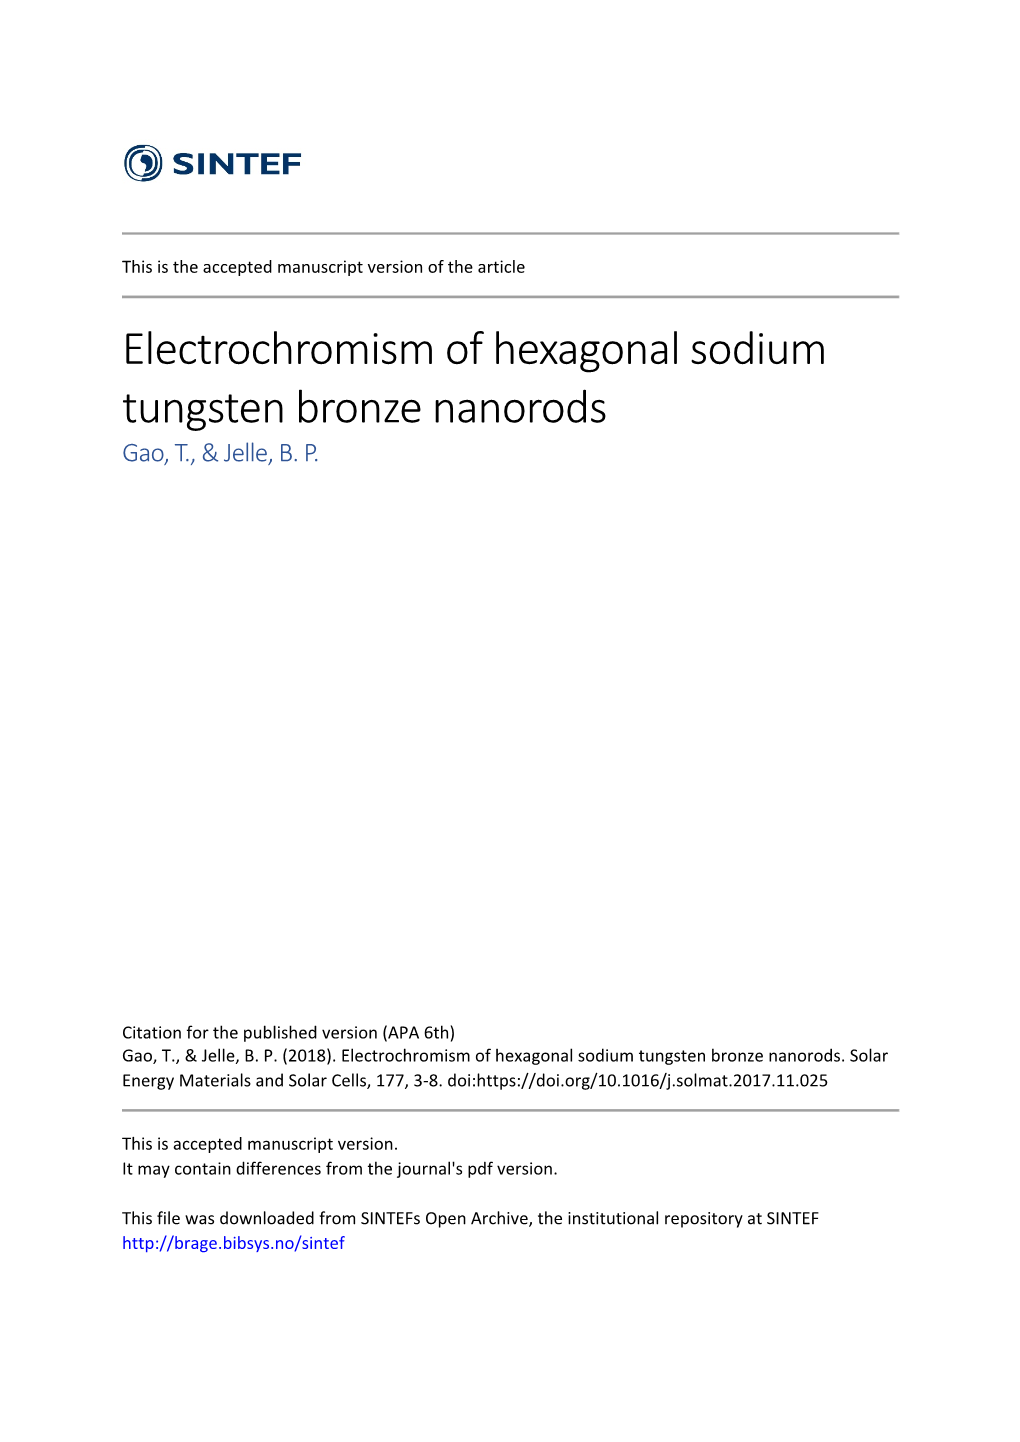 Electrochromism of Hexagonal Sodium Tungsten Bronze Nanorods Gao, T., & Jelle, B